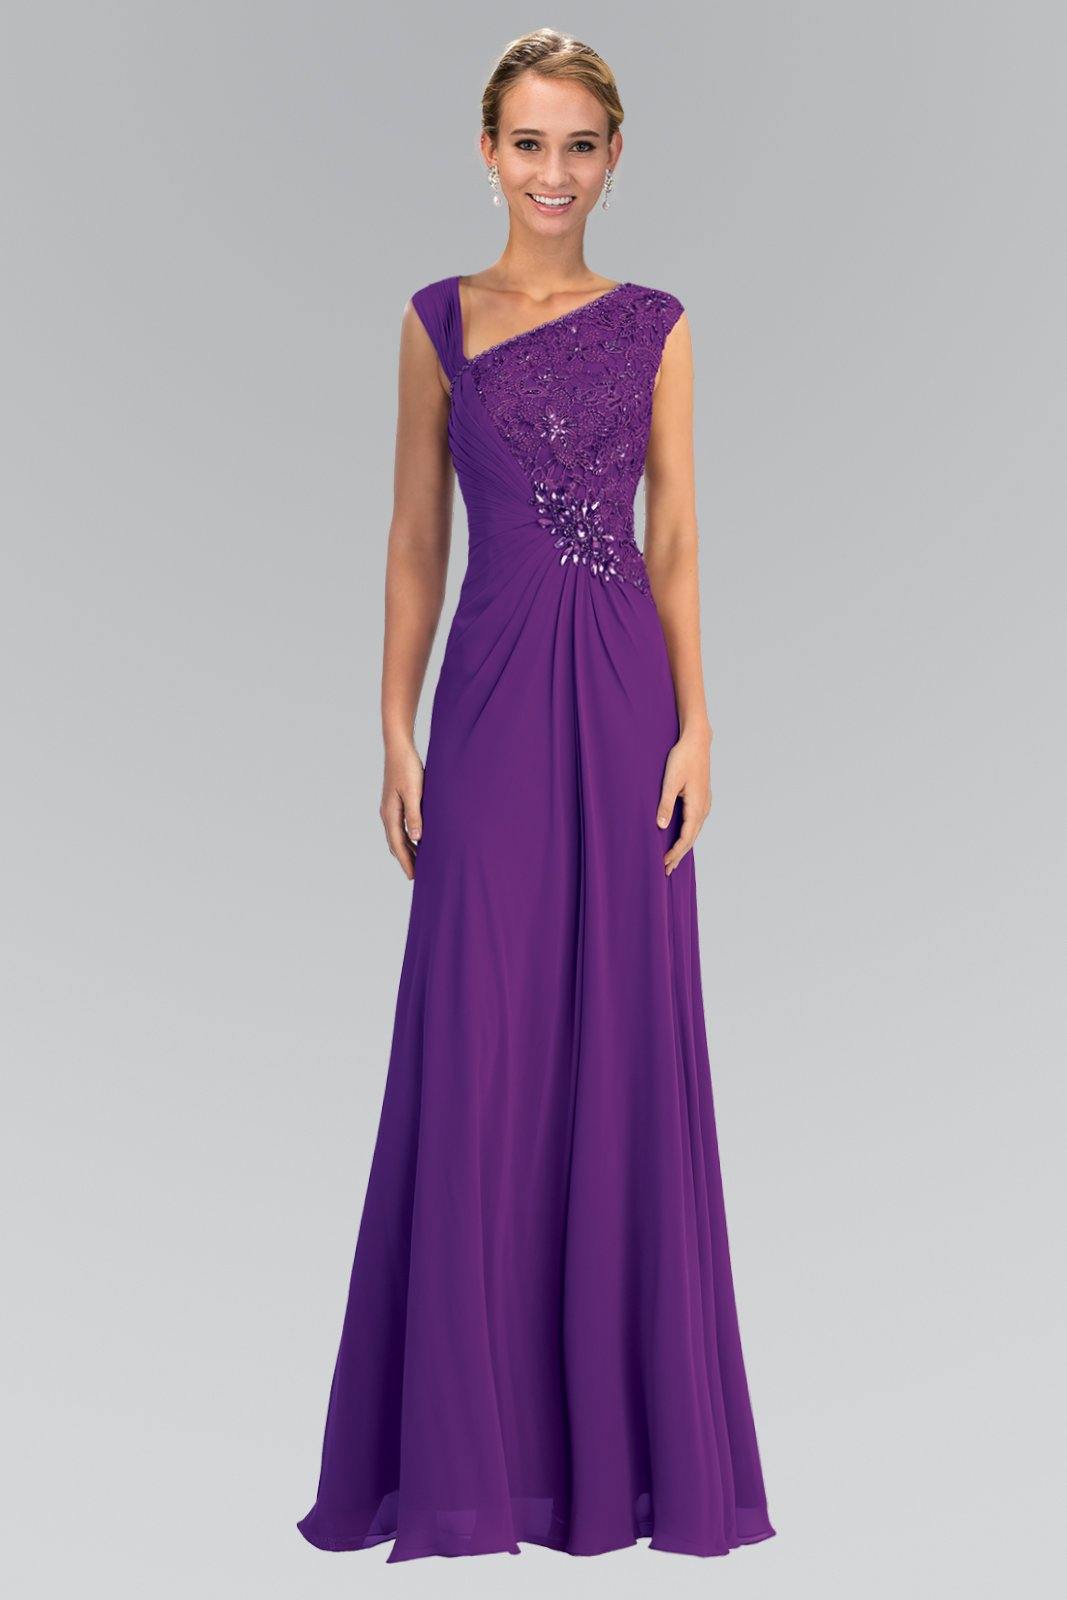 Lace Embellished Bodice Chiffon Long Formal Dress - The Dress Outlet Elizabeth K